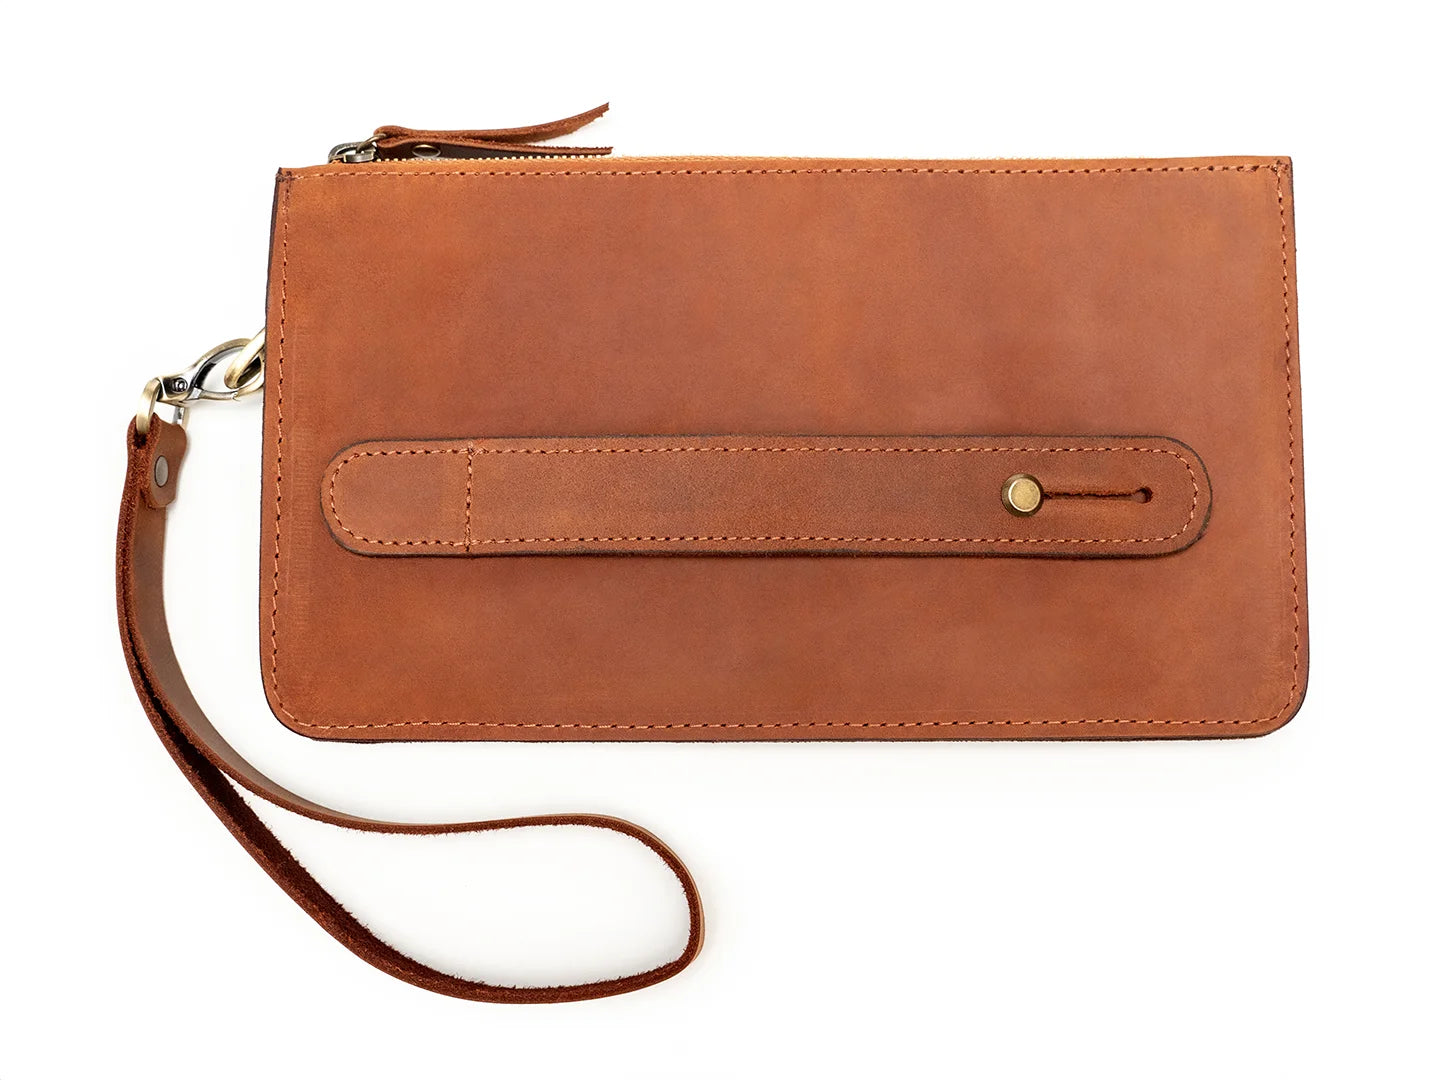 Leather Clutch Wristlet Hand Bag